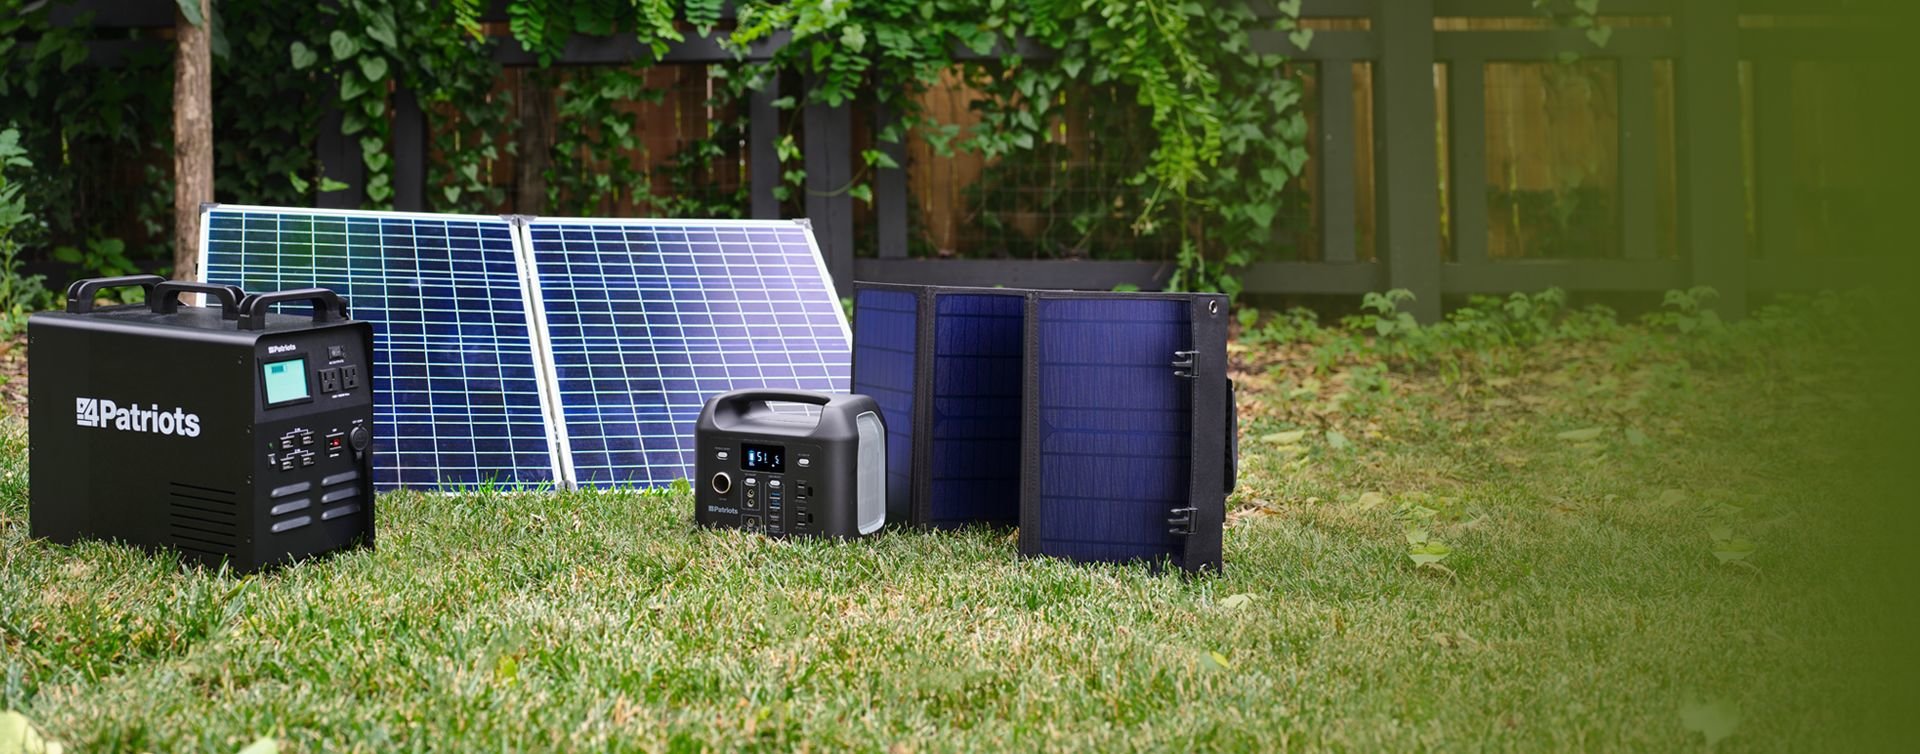 Patriot Power Generator 1800, Patriot Power Sidekick, 100-watt solar panel, and 40-watt solar panel setup in a backyard.